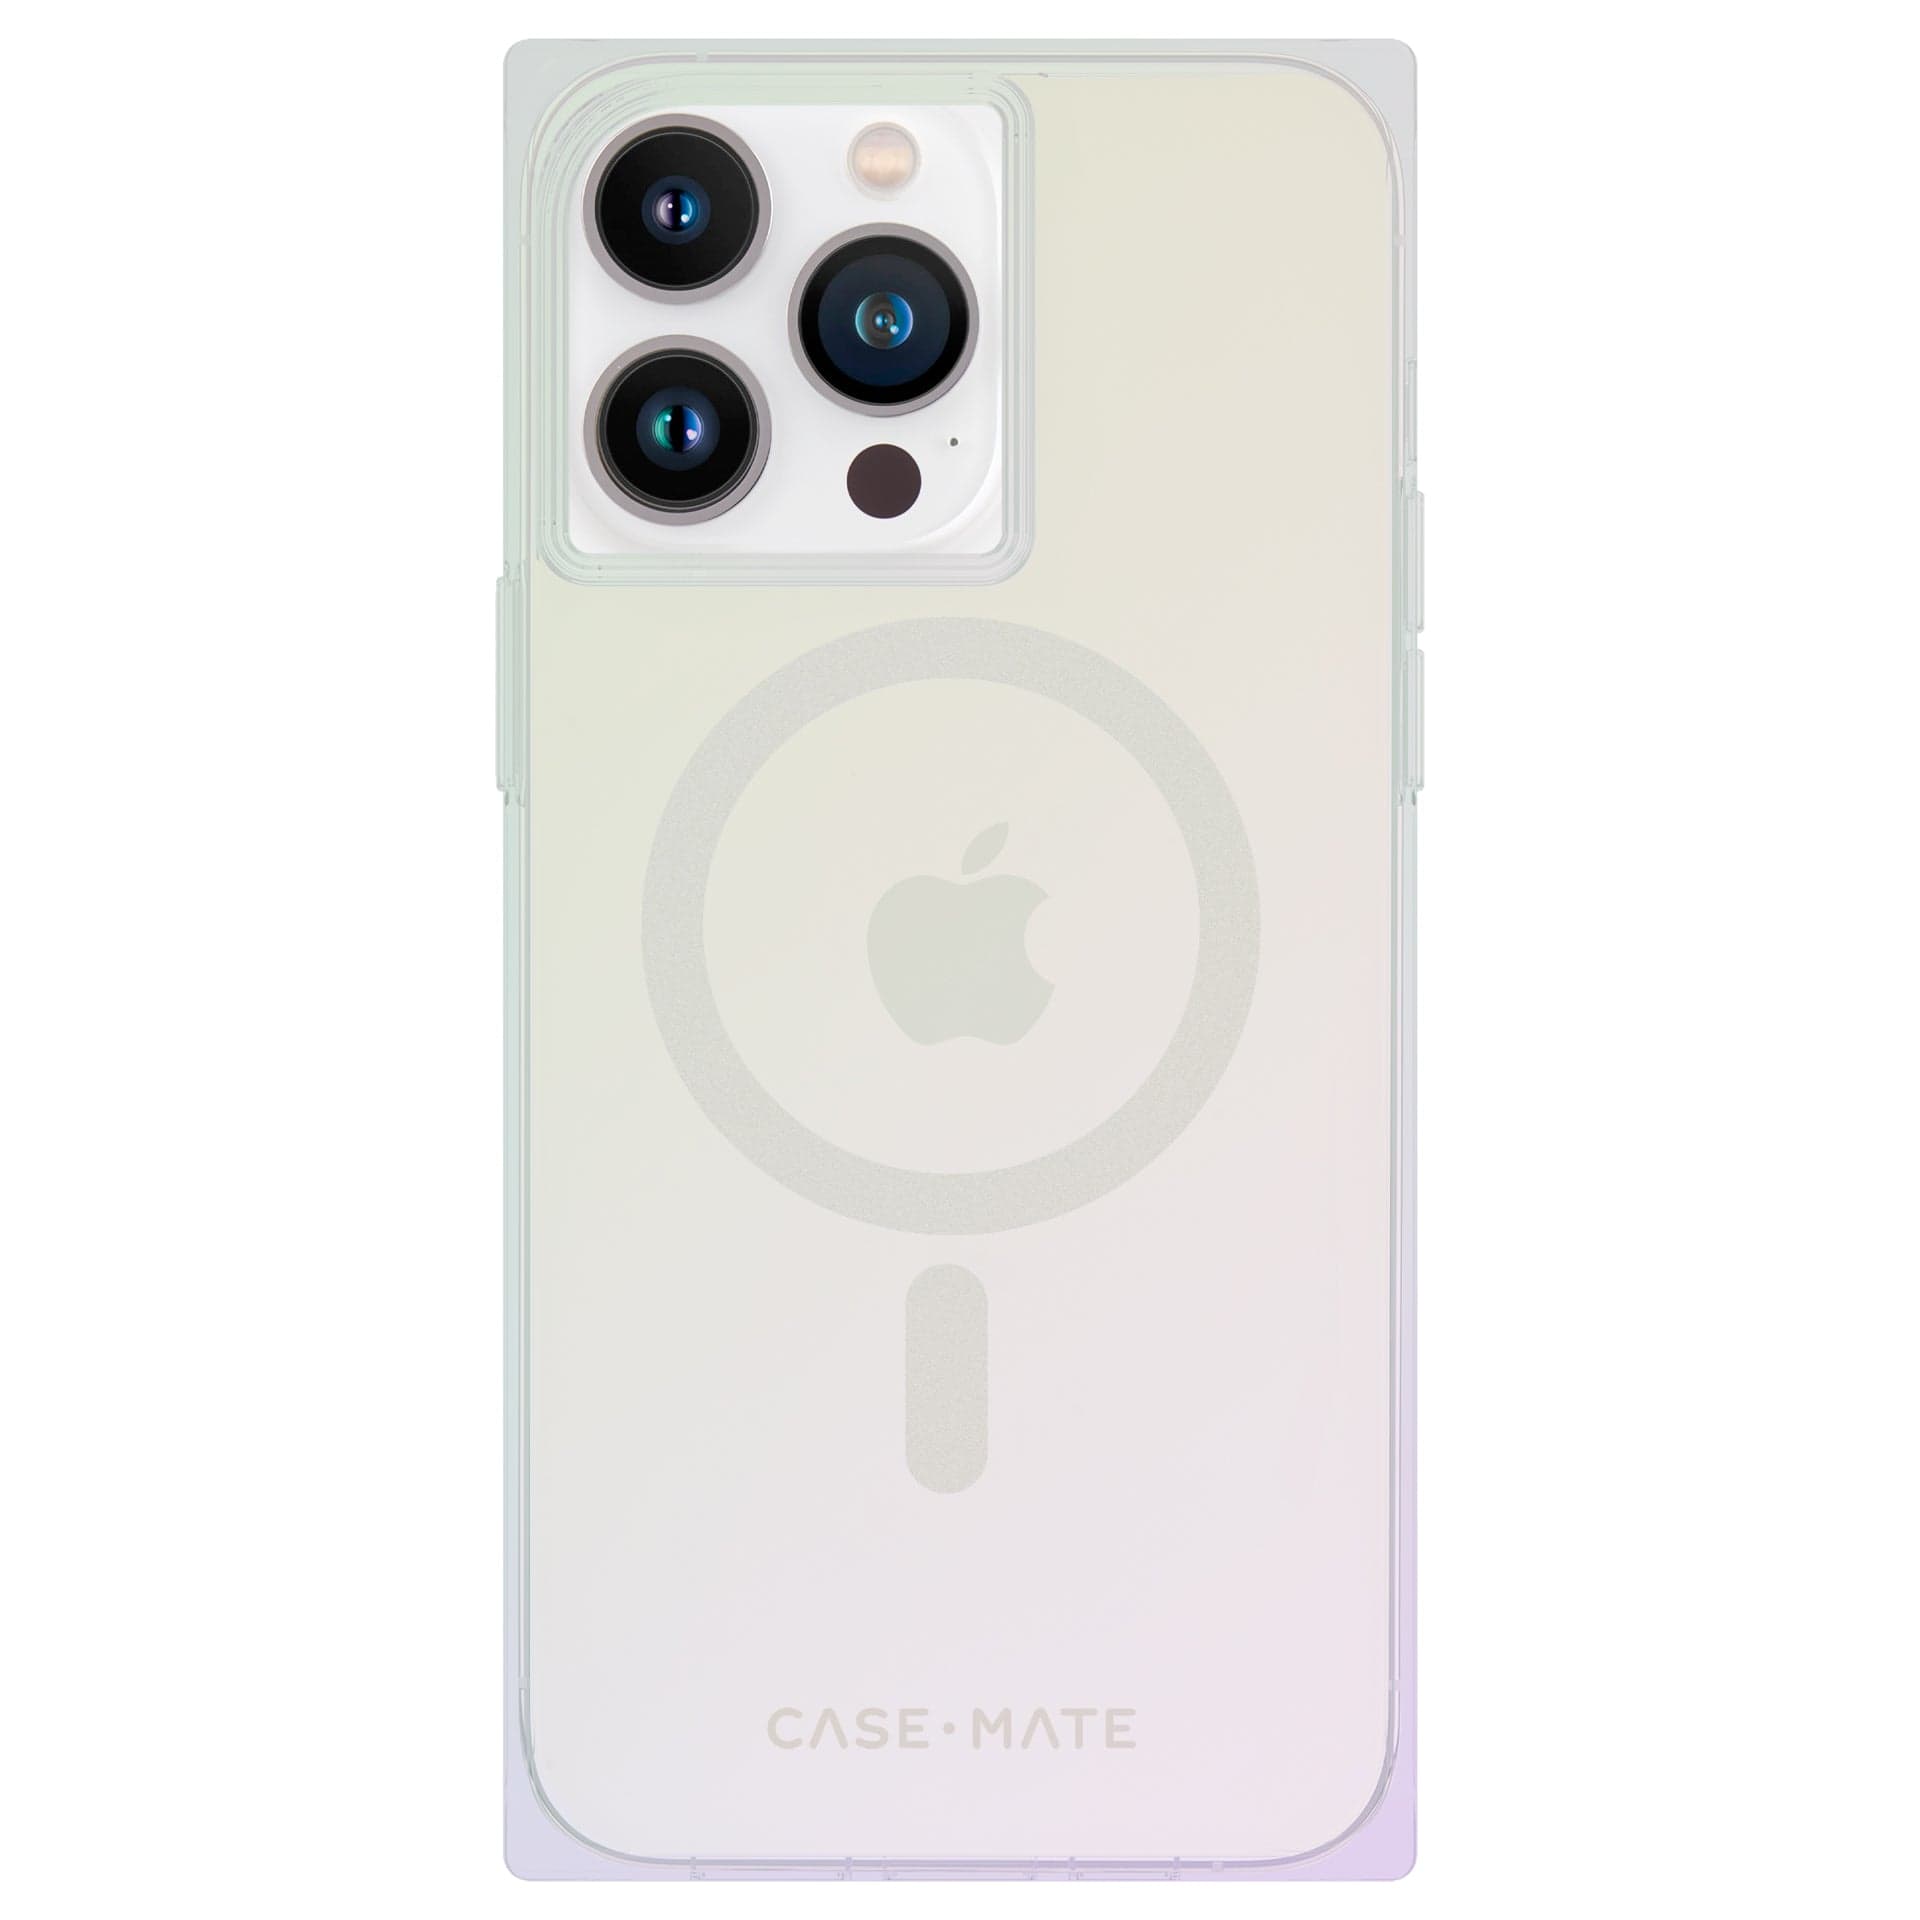 iPhone 11 Pro Max Rainbow Shade Matte Cases 